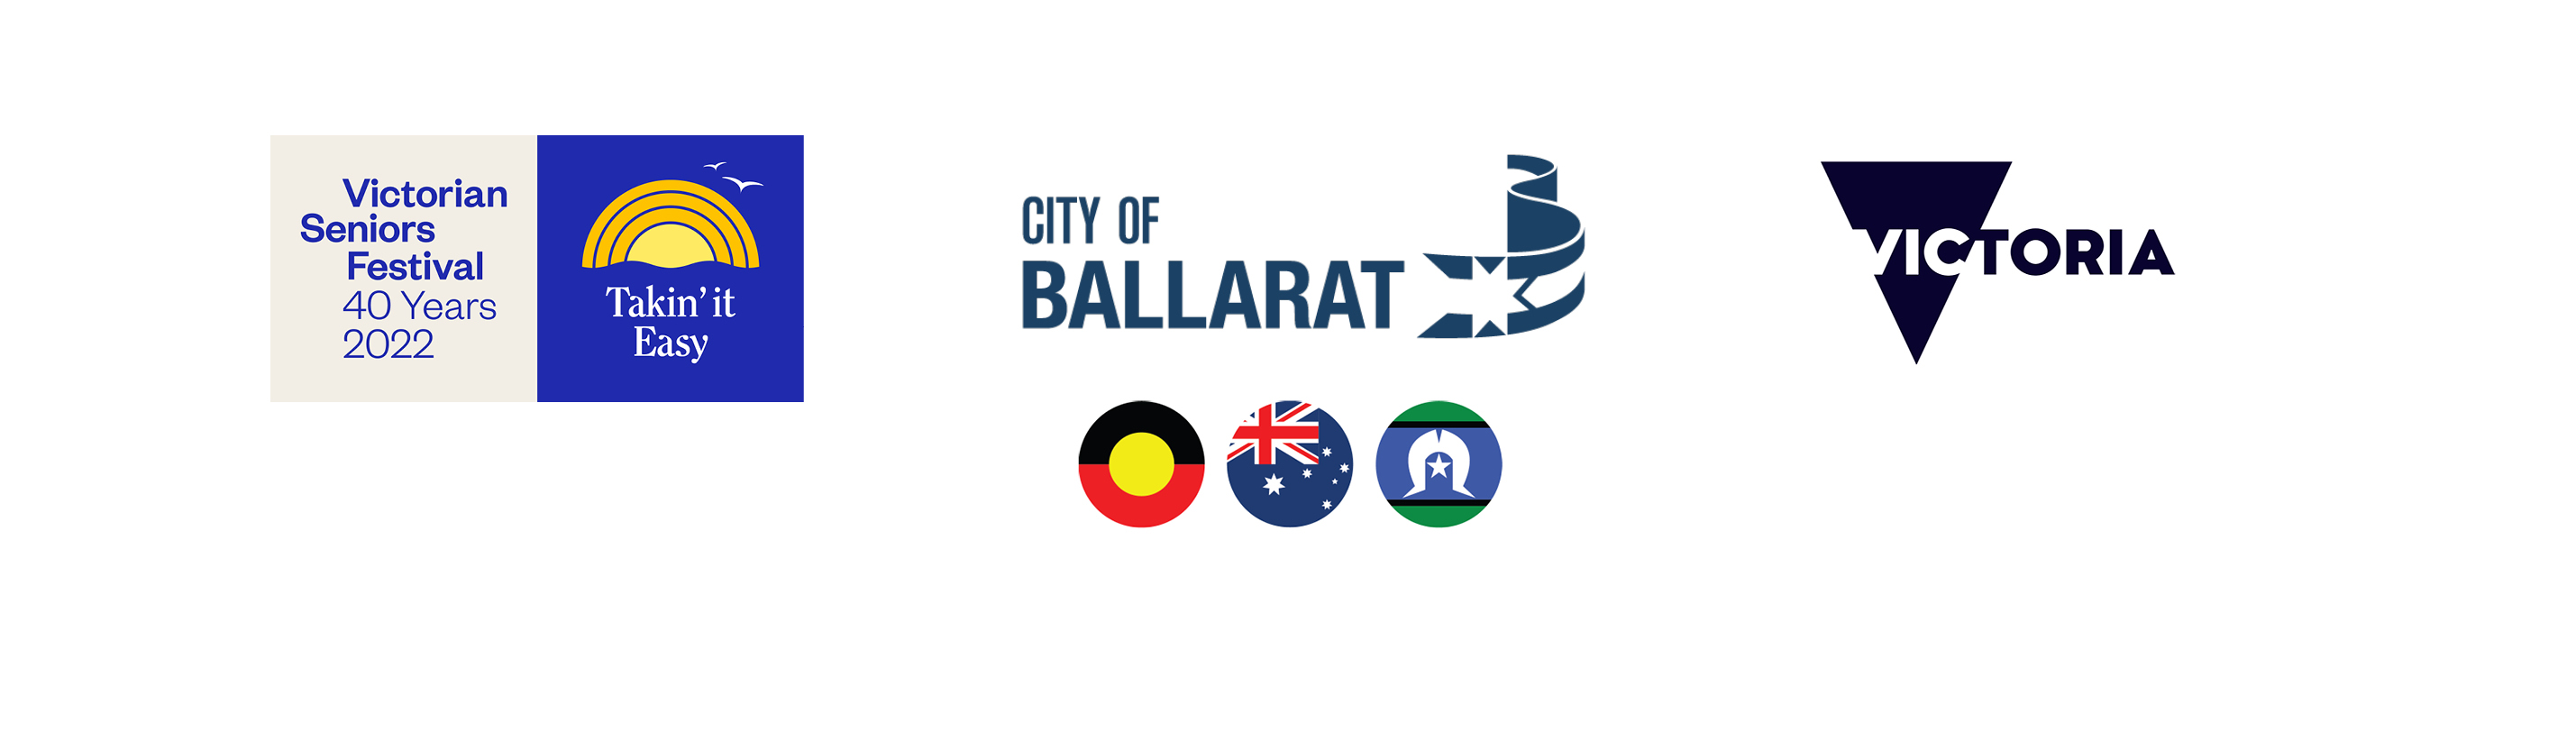 Logos - VSF, VicGov, City of Ballarat